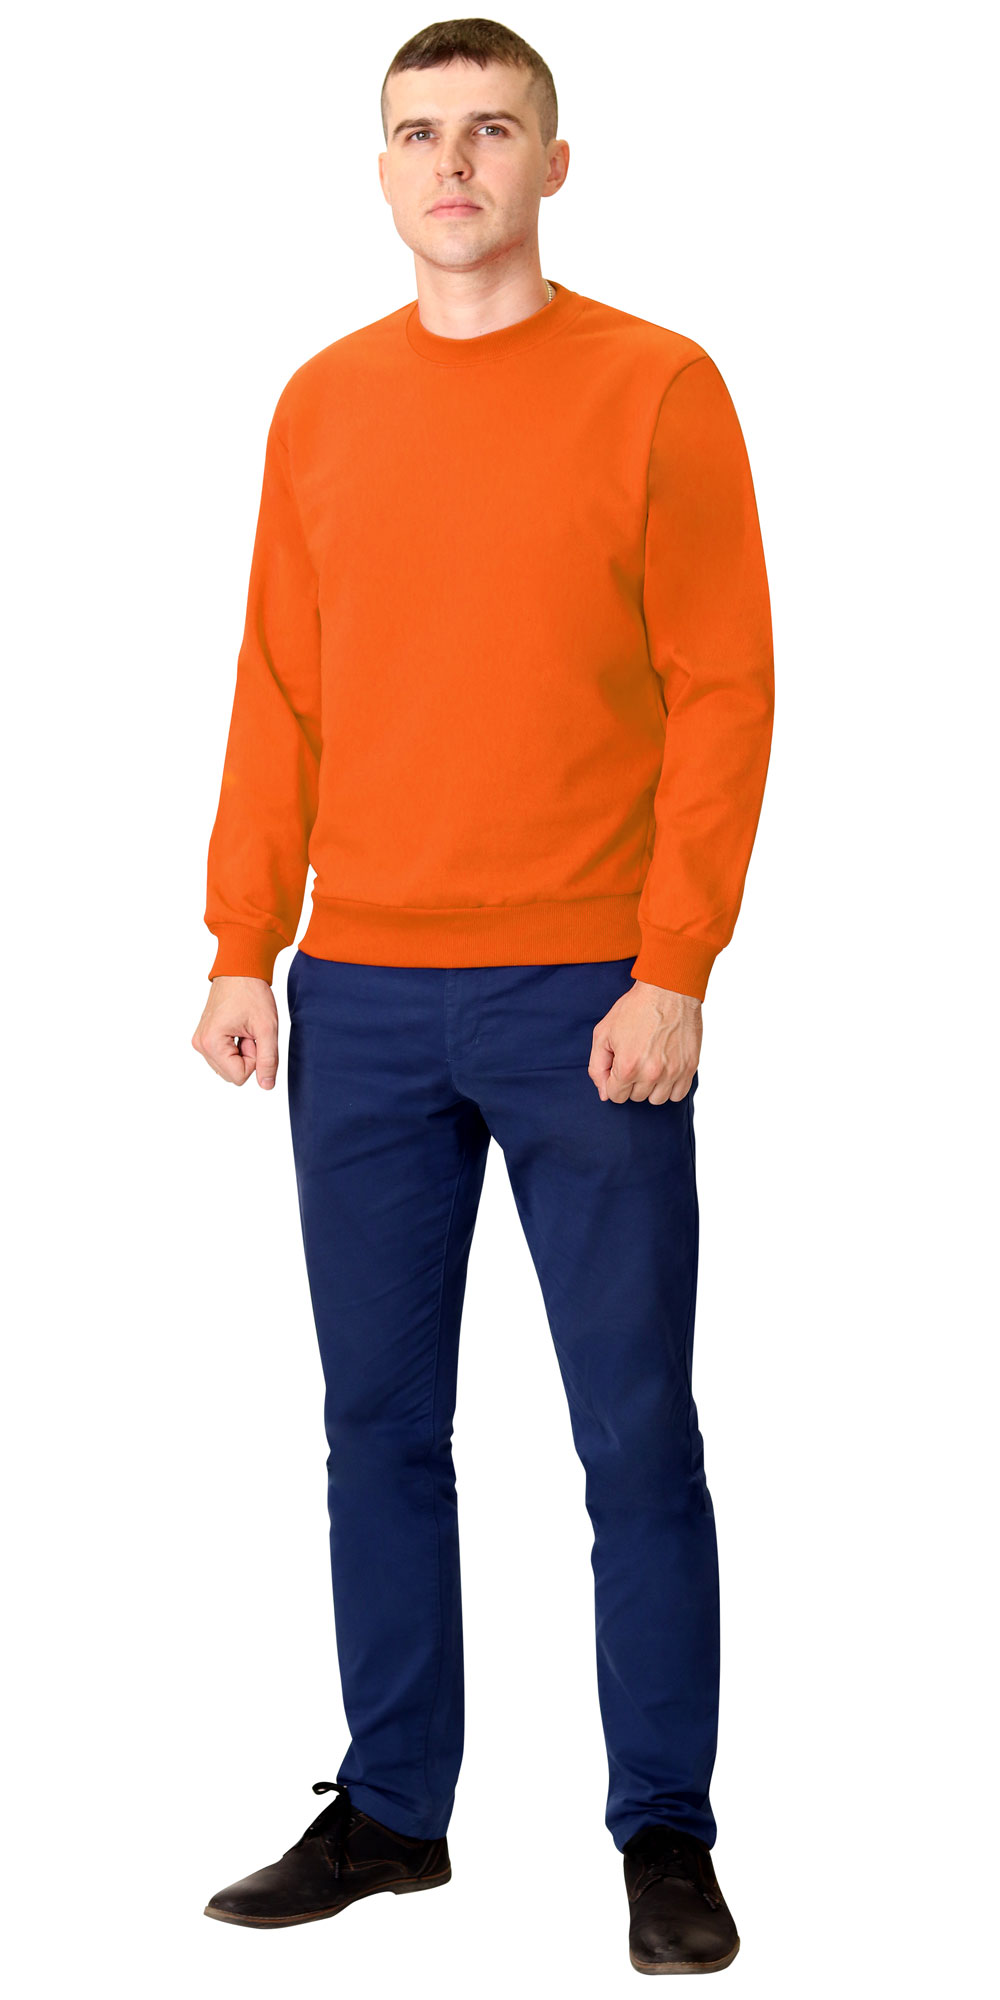 Толстовка-футер, длинный рукав с манжетом, цвет: оранжевый, ткань: 100% ХБ